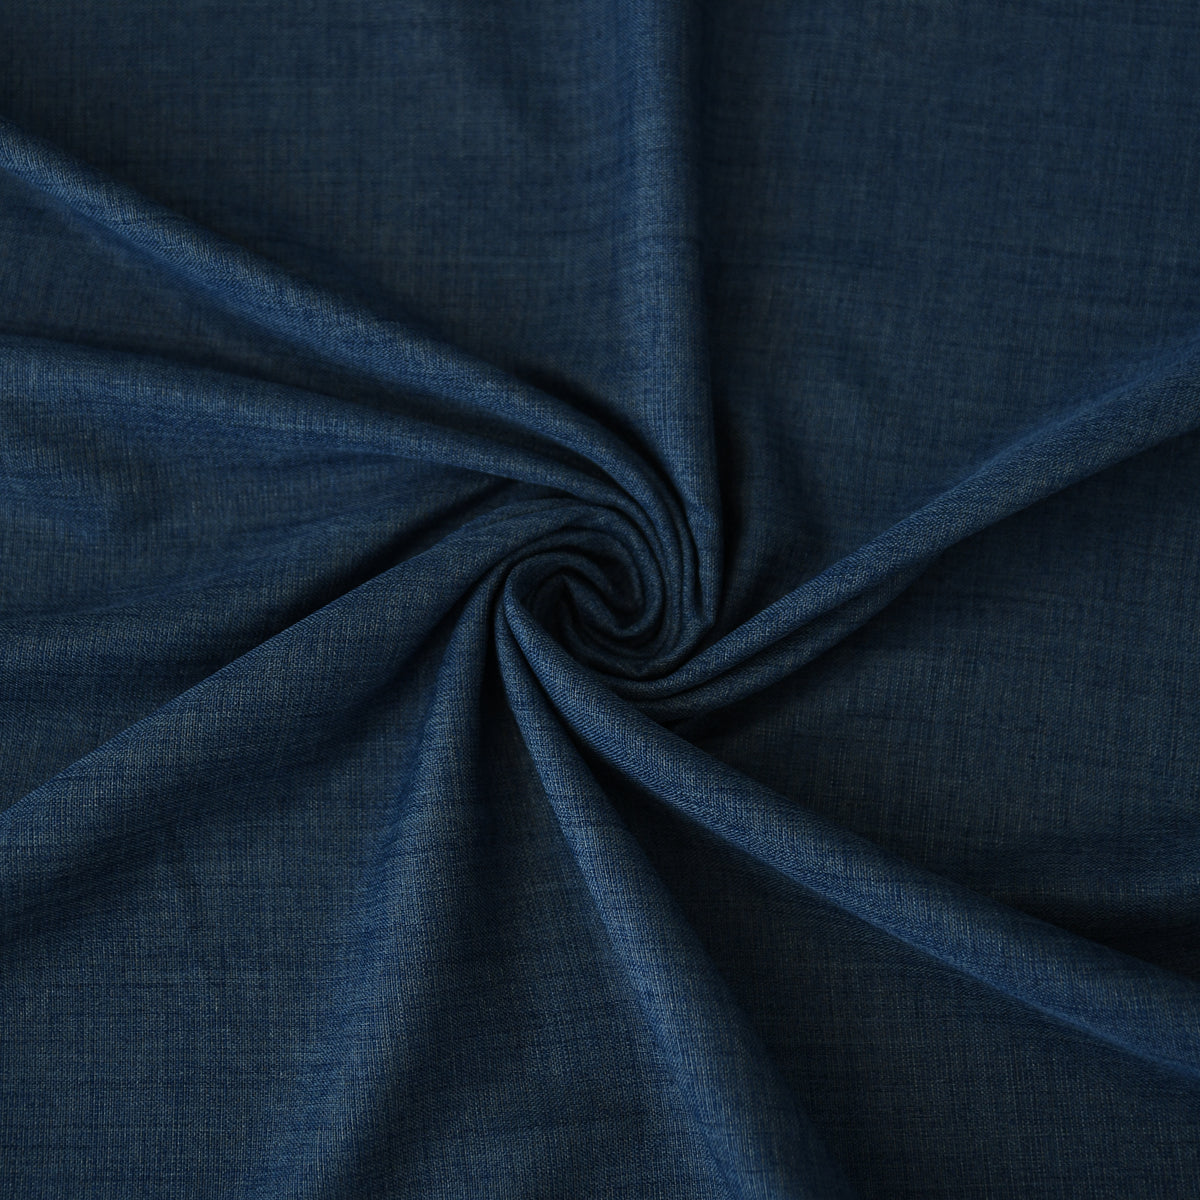 Blackout curtain sea blue Mael